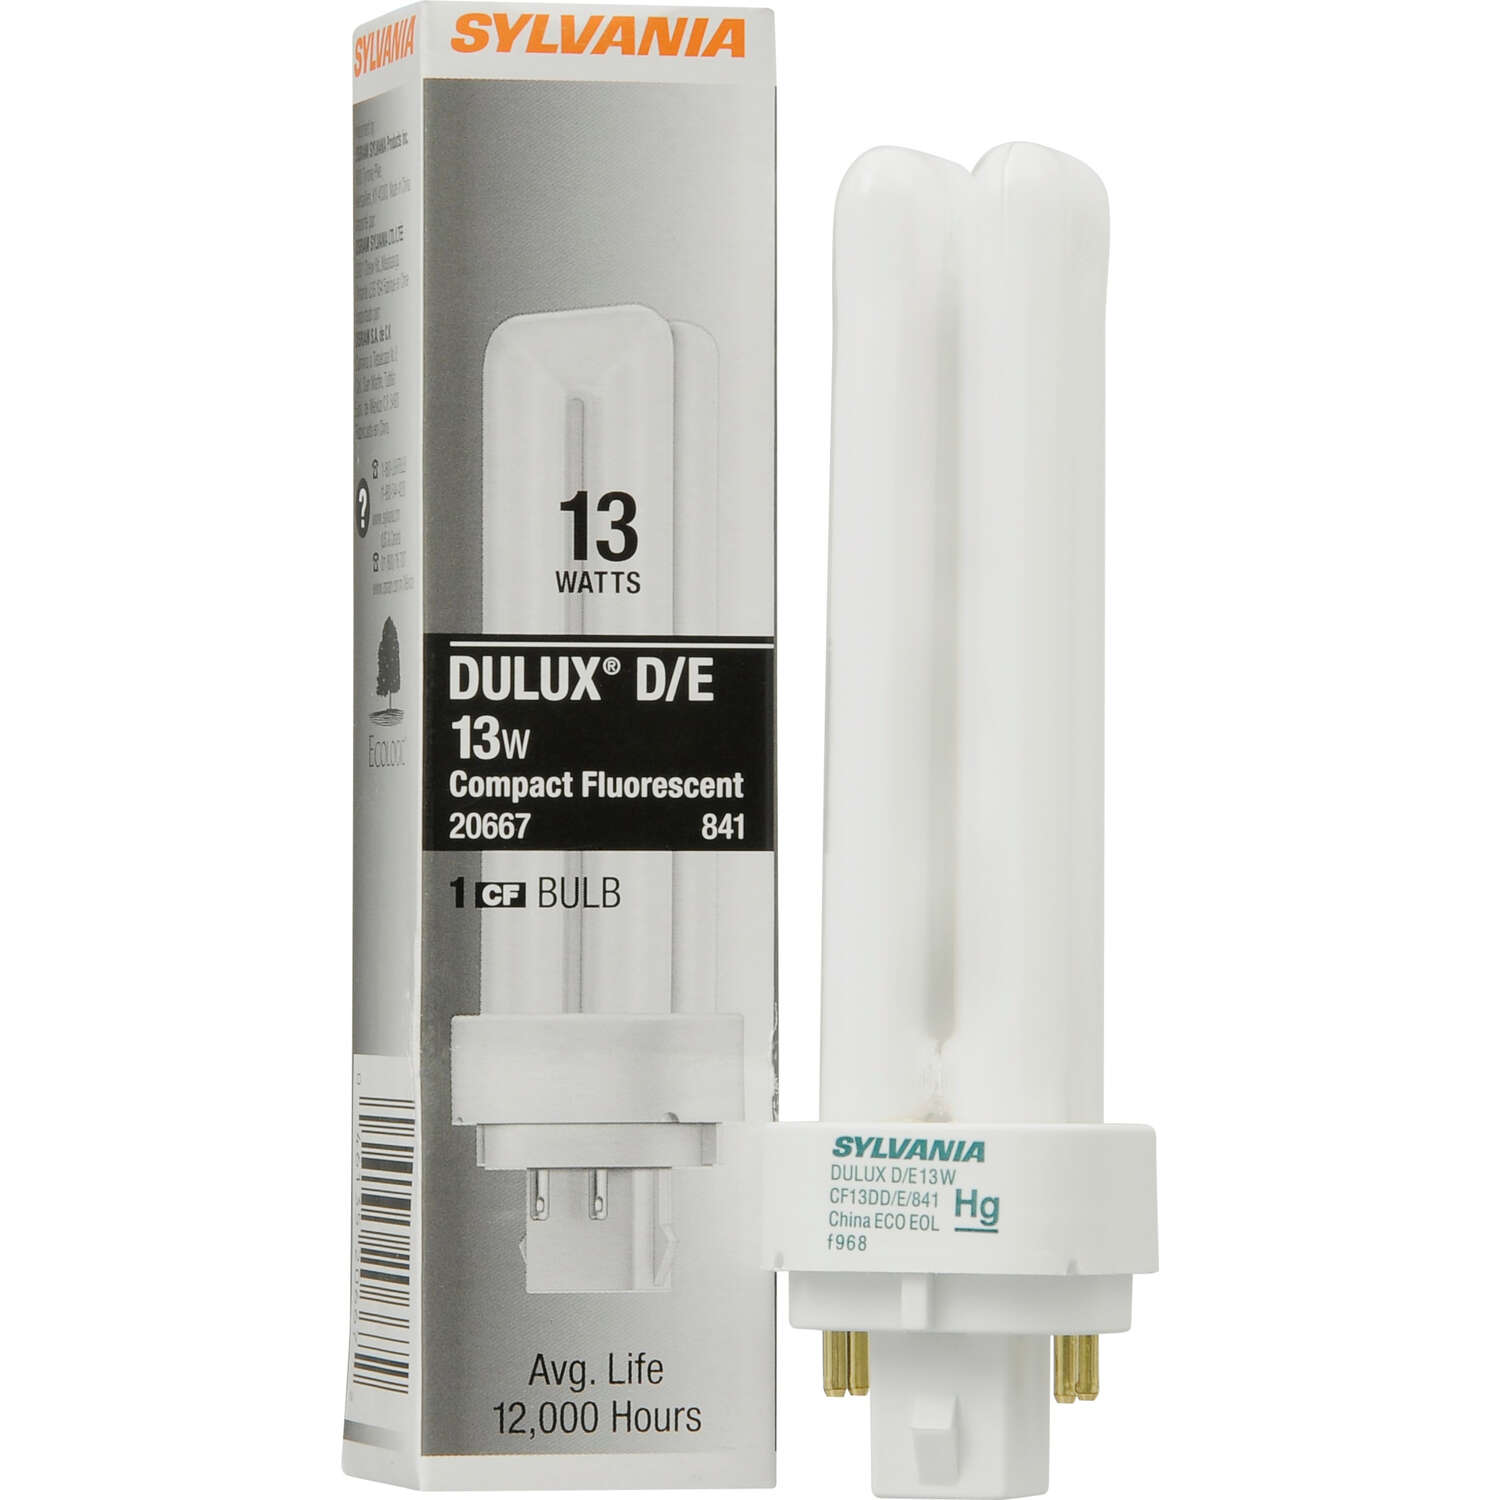 ESTATE SALE Sylvania Dulux 13W Fluorescent Compact #20283 